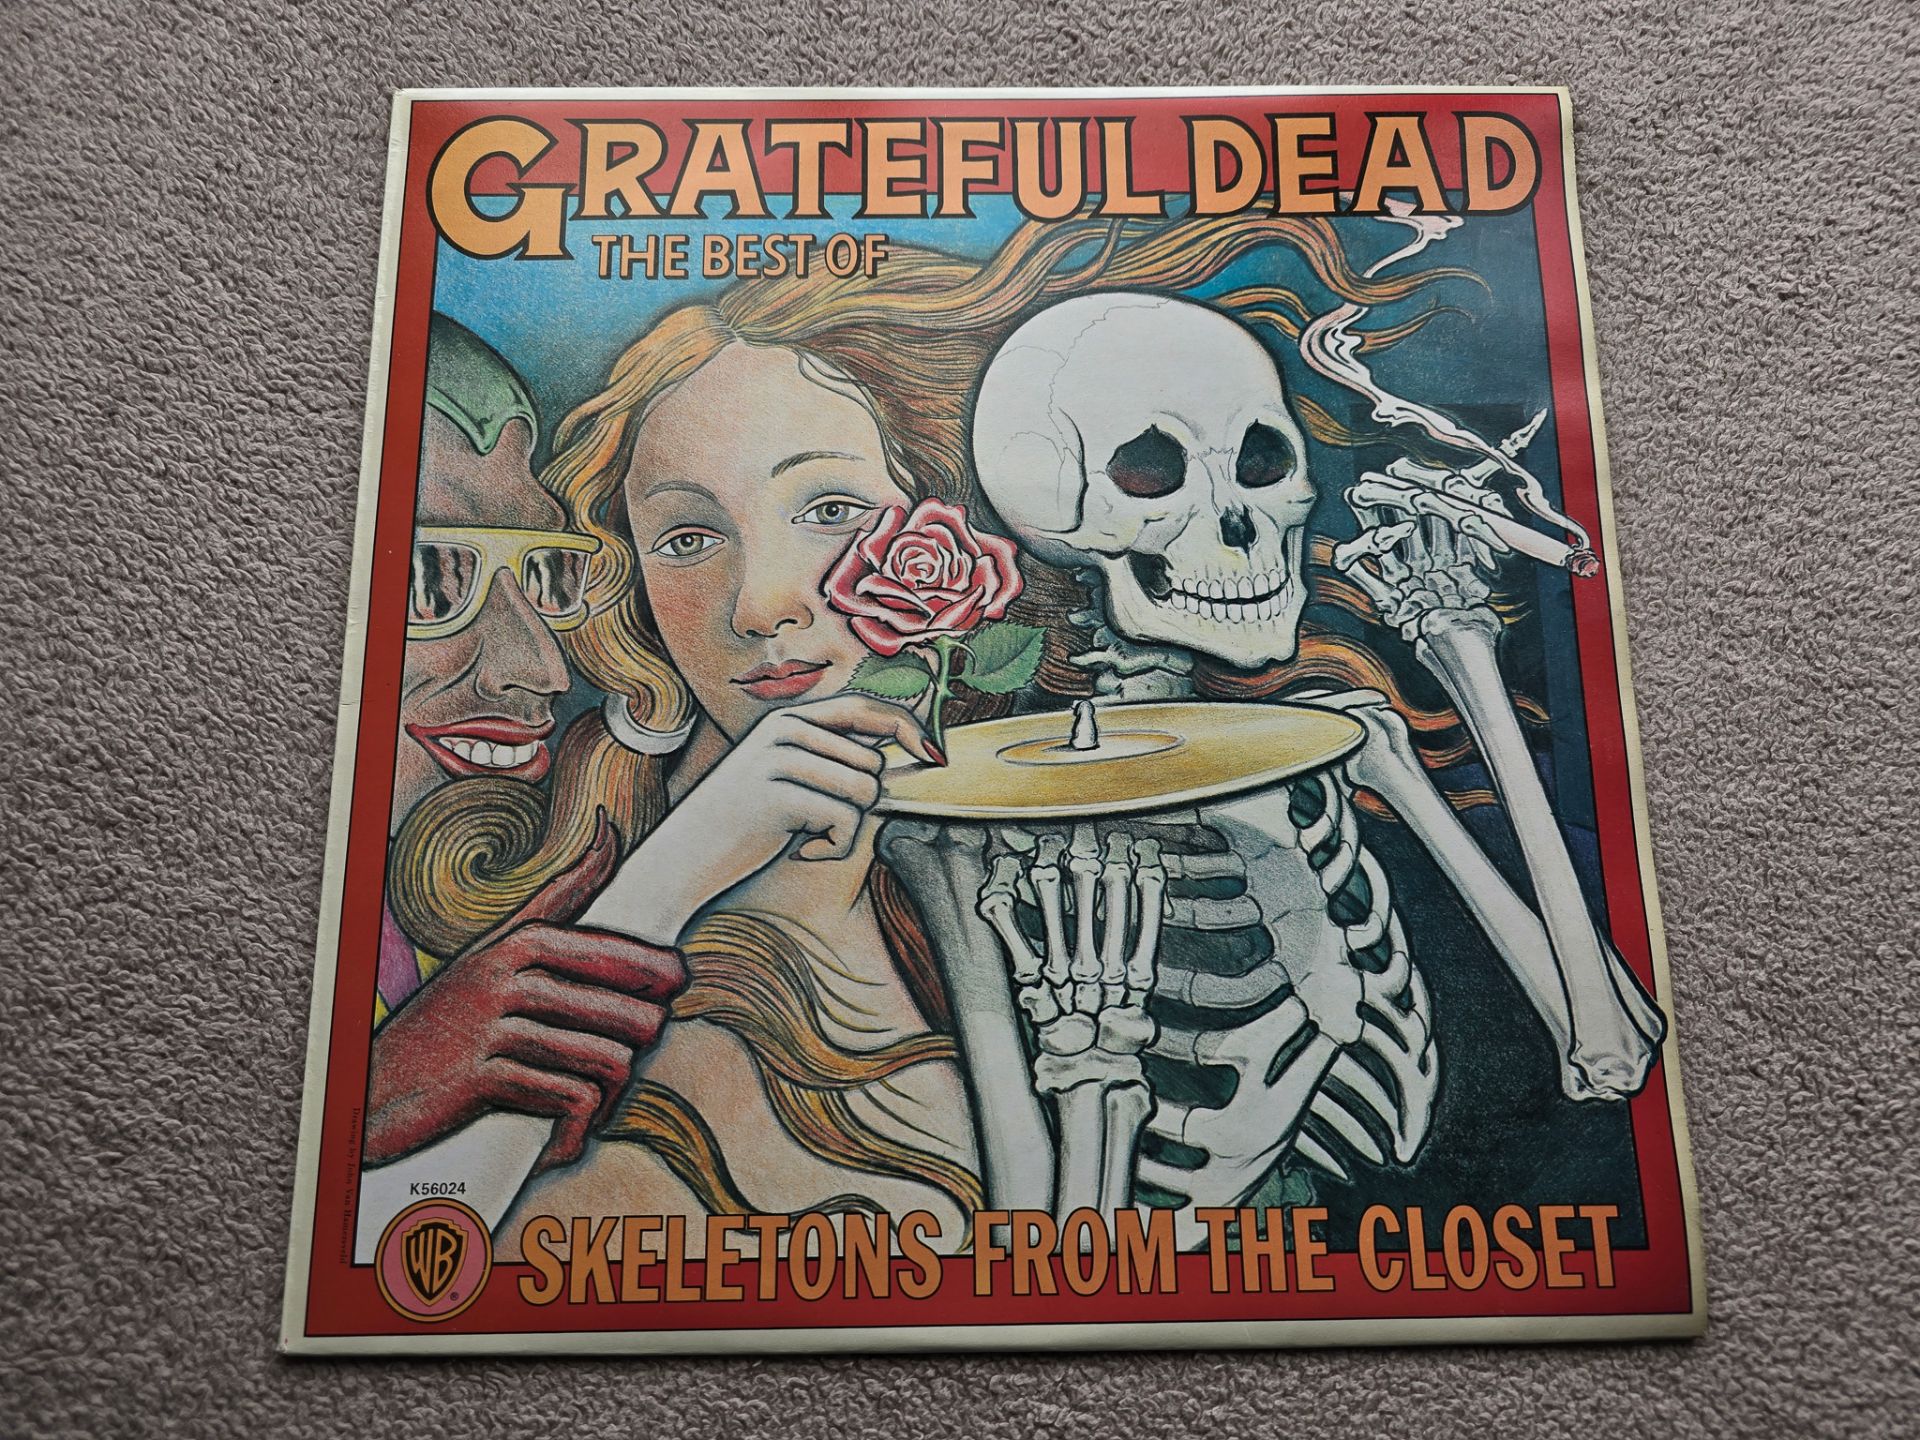 The Grateful Dead – Live/Dead Mint UK 1971 Double vinyl LP + Skeletons from the closet - Image 10 of 13